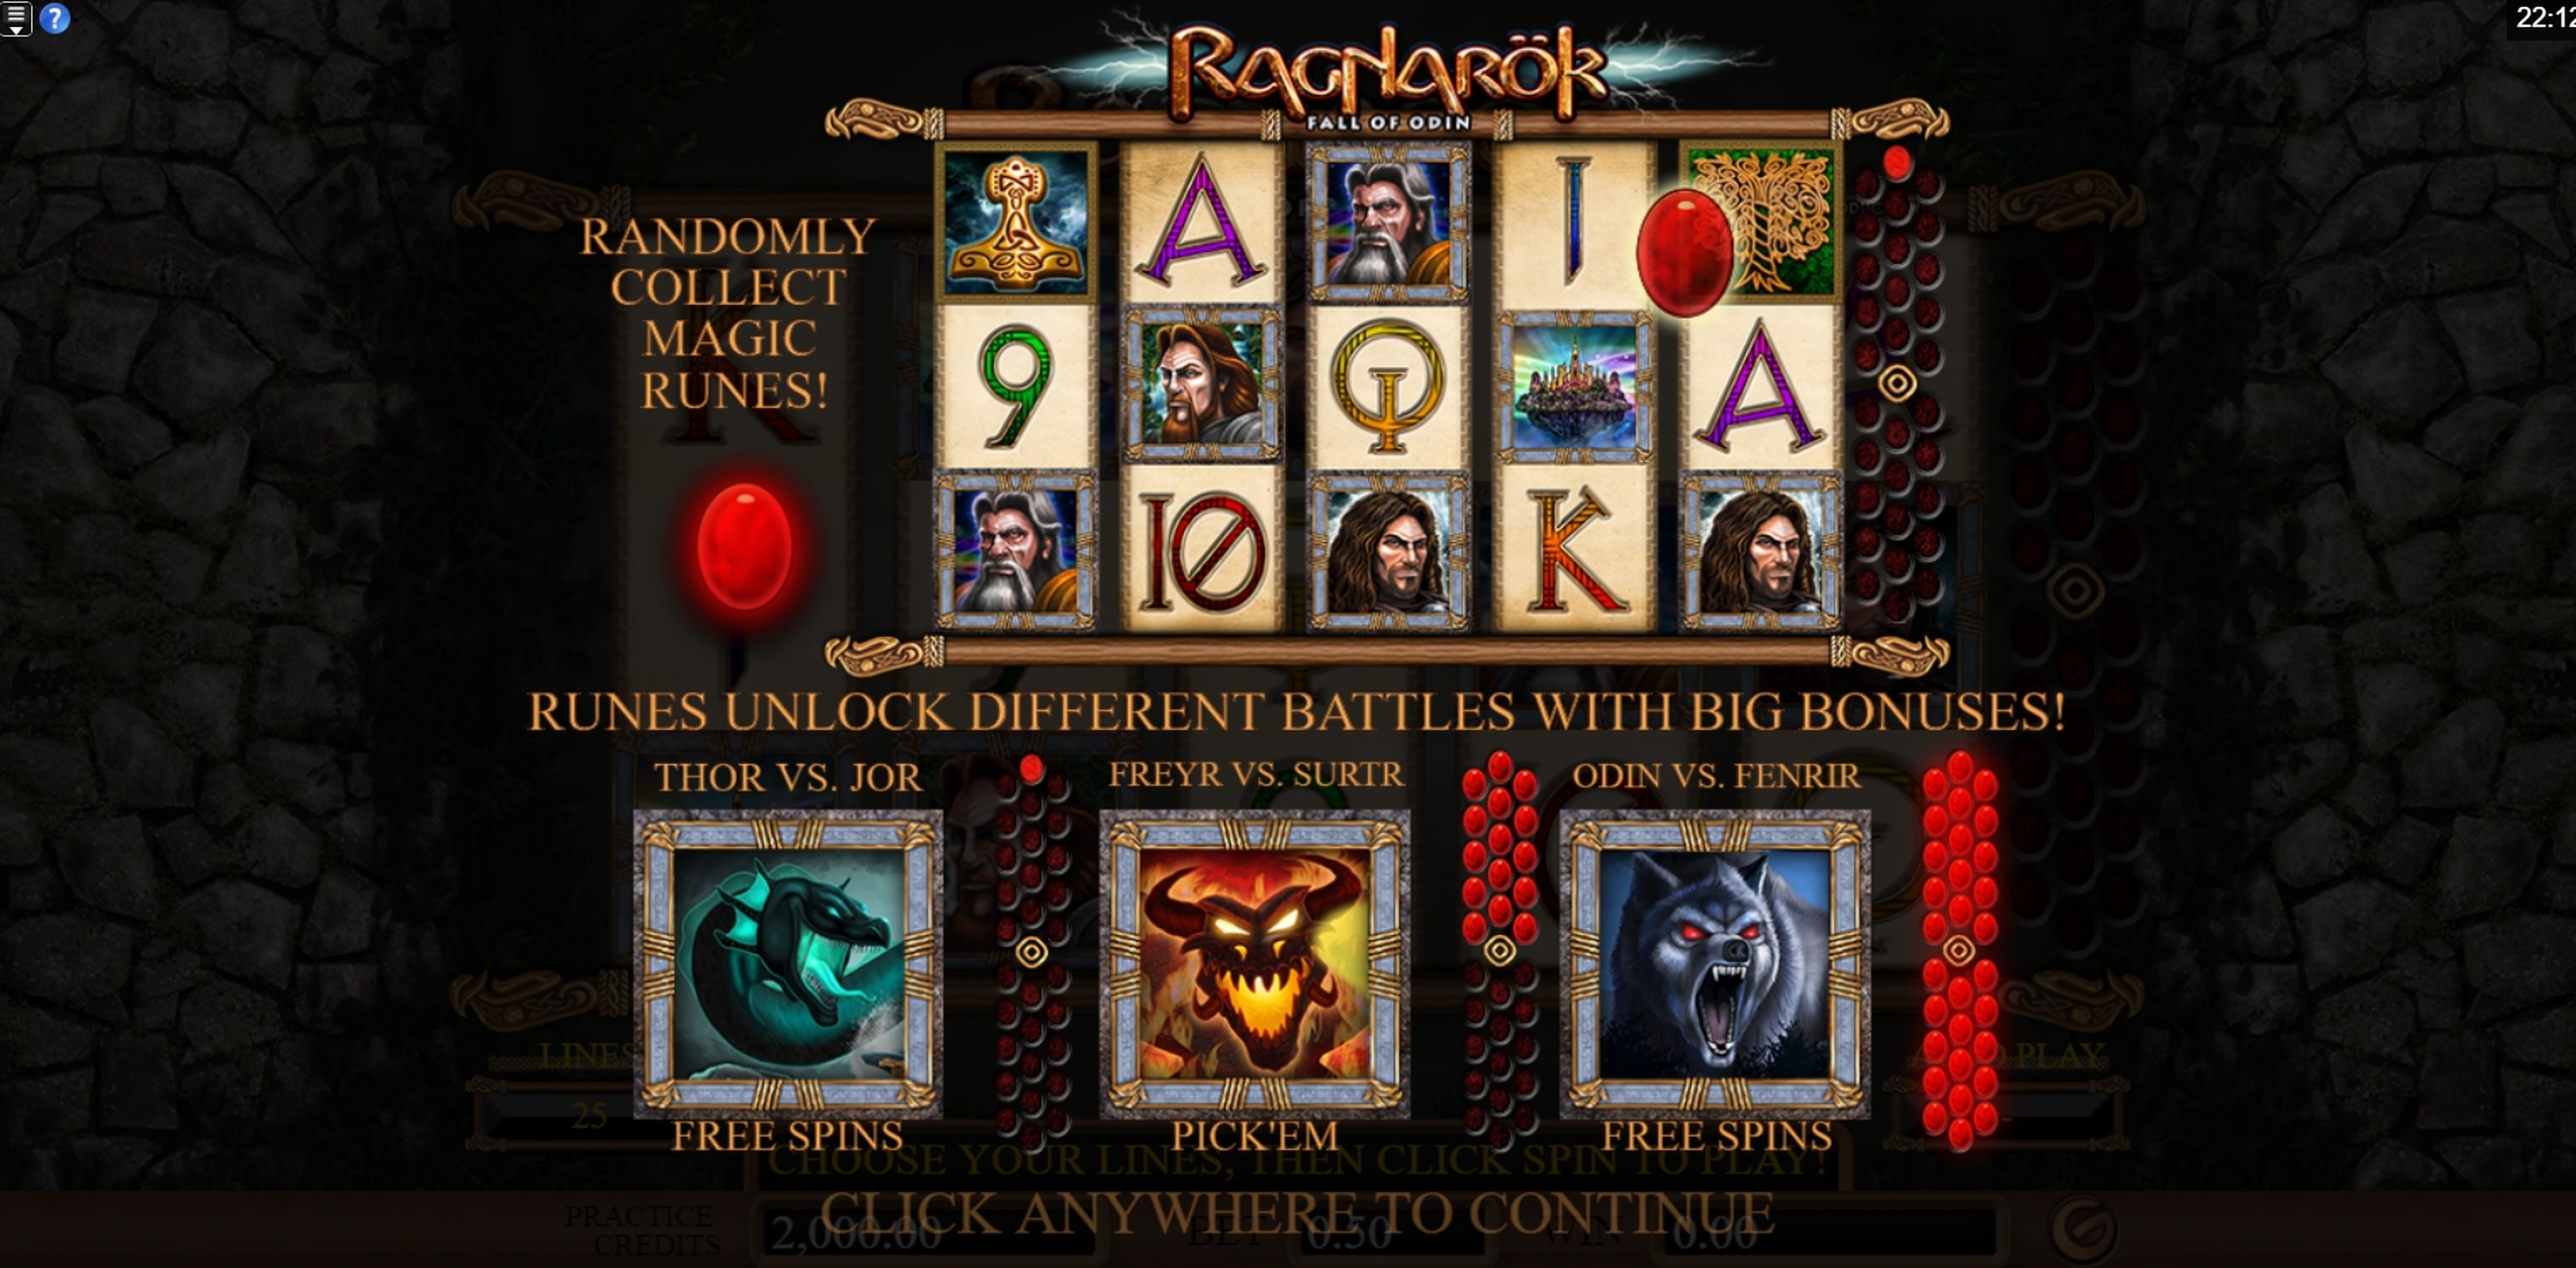 Play Ragnarok Free Casino Slot Game by Genesis Gaming